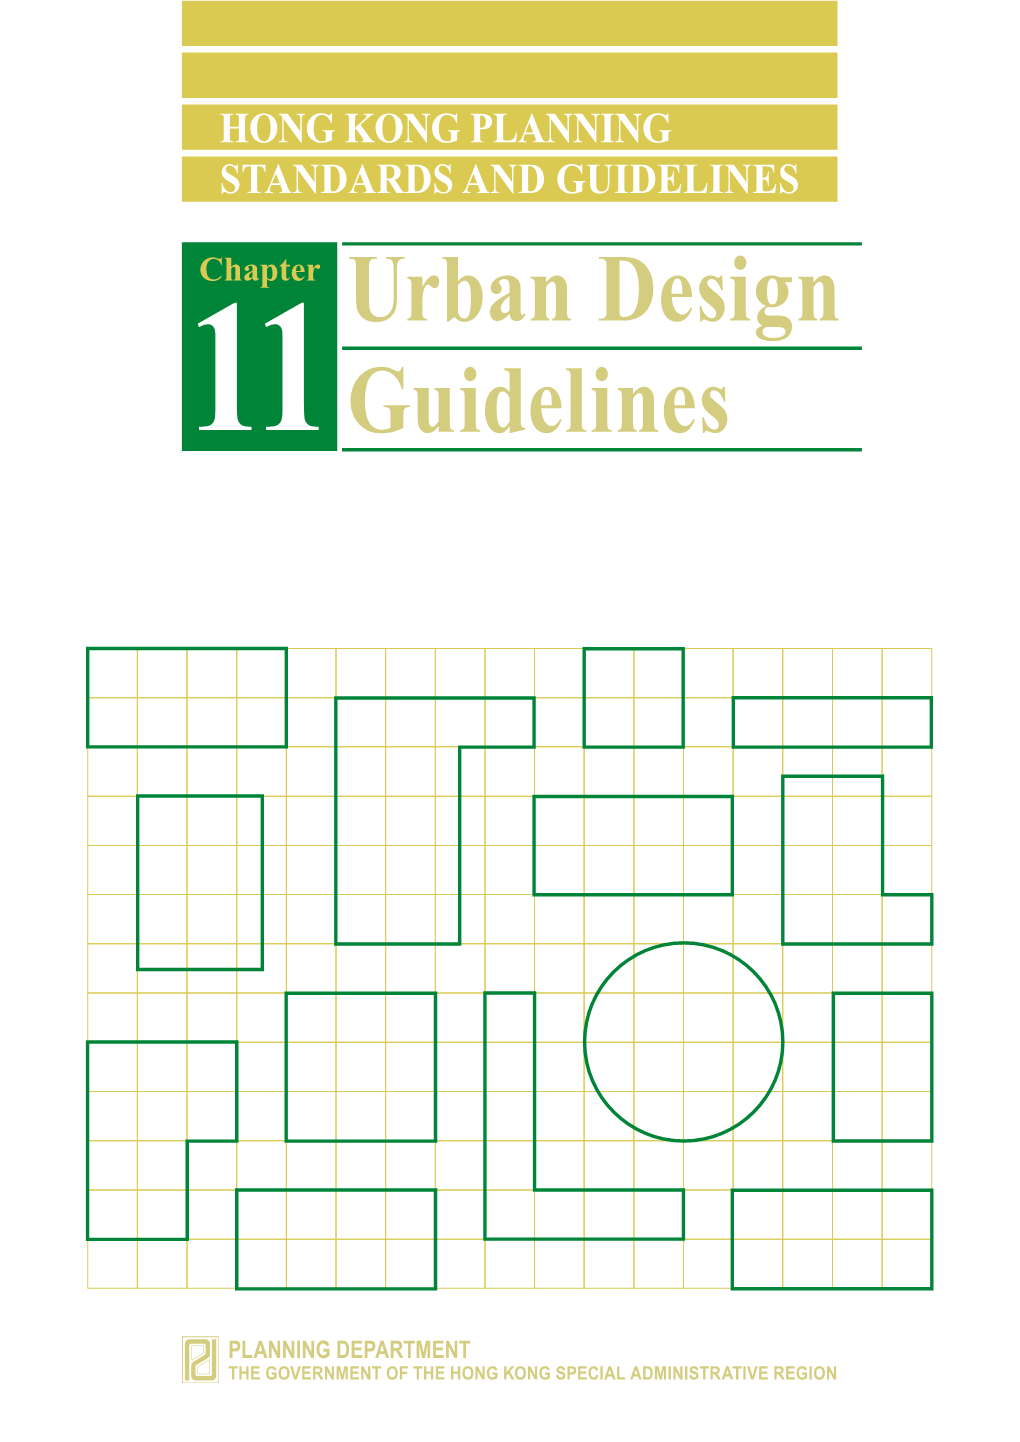 Urban Design Guidelines